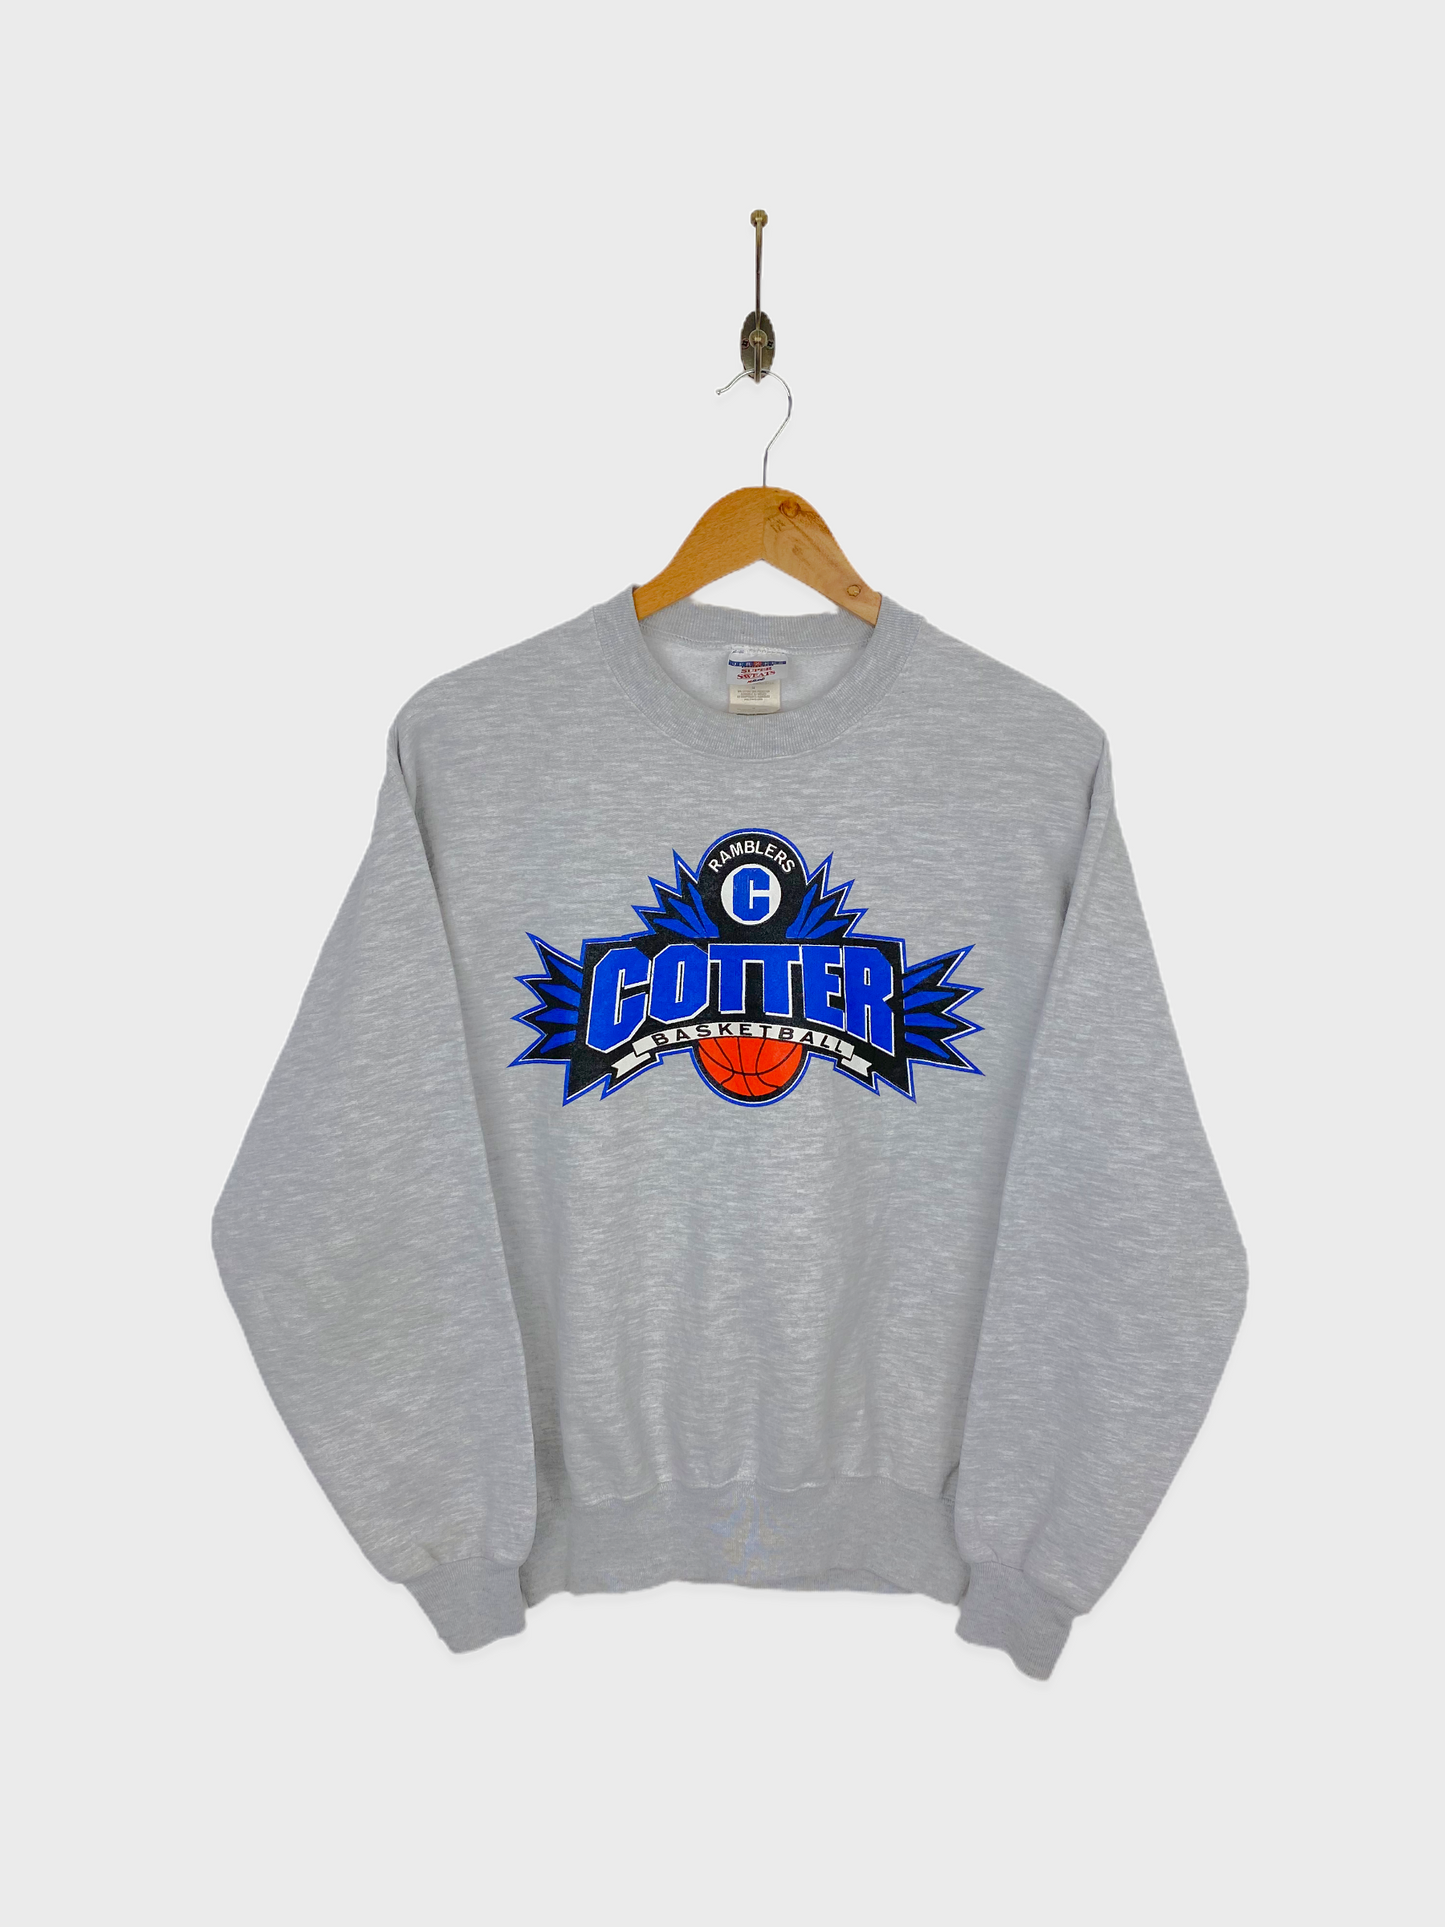 Cotter Ramblers Basketball Vintage Sweatshirt Size 8